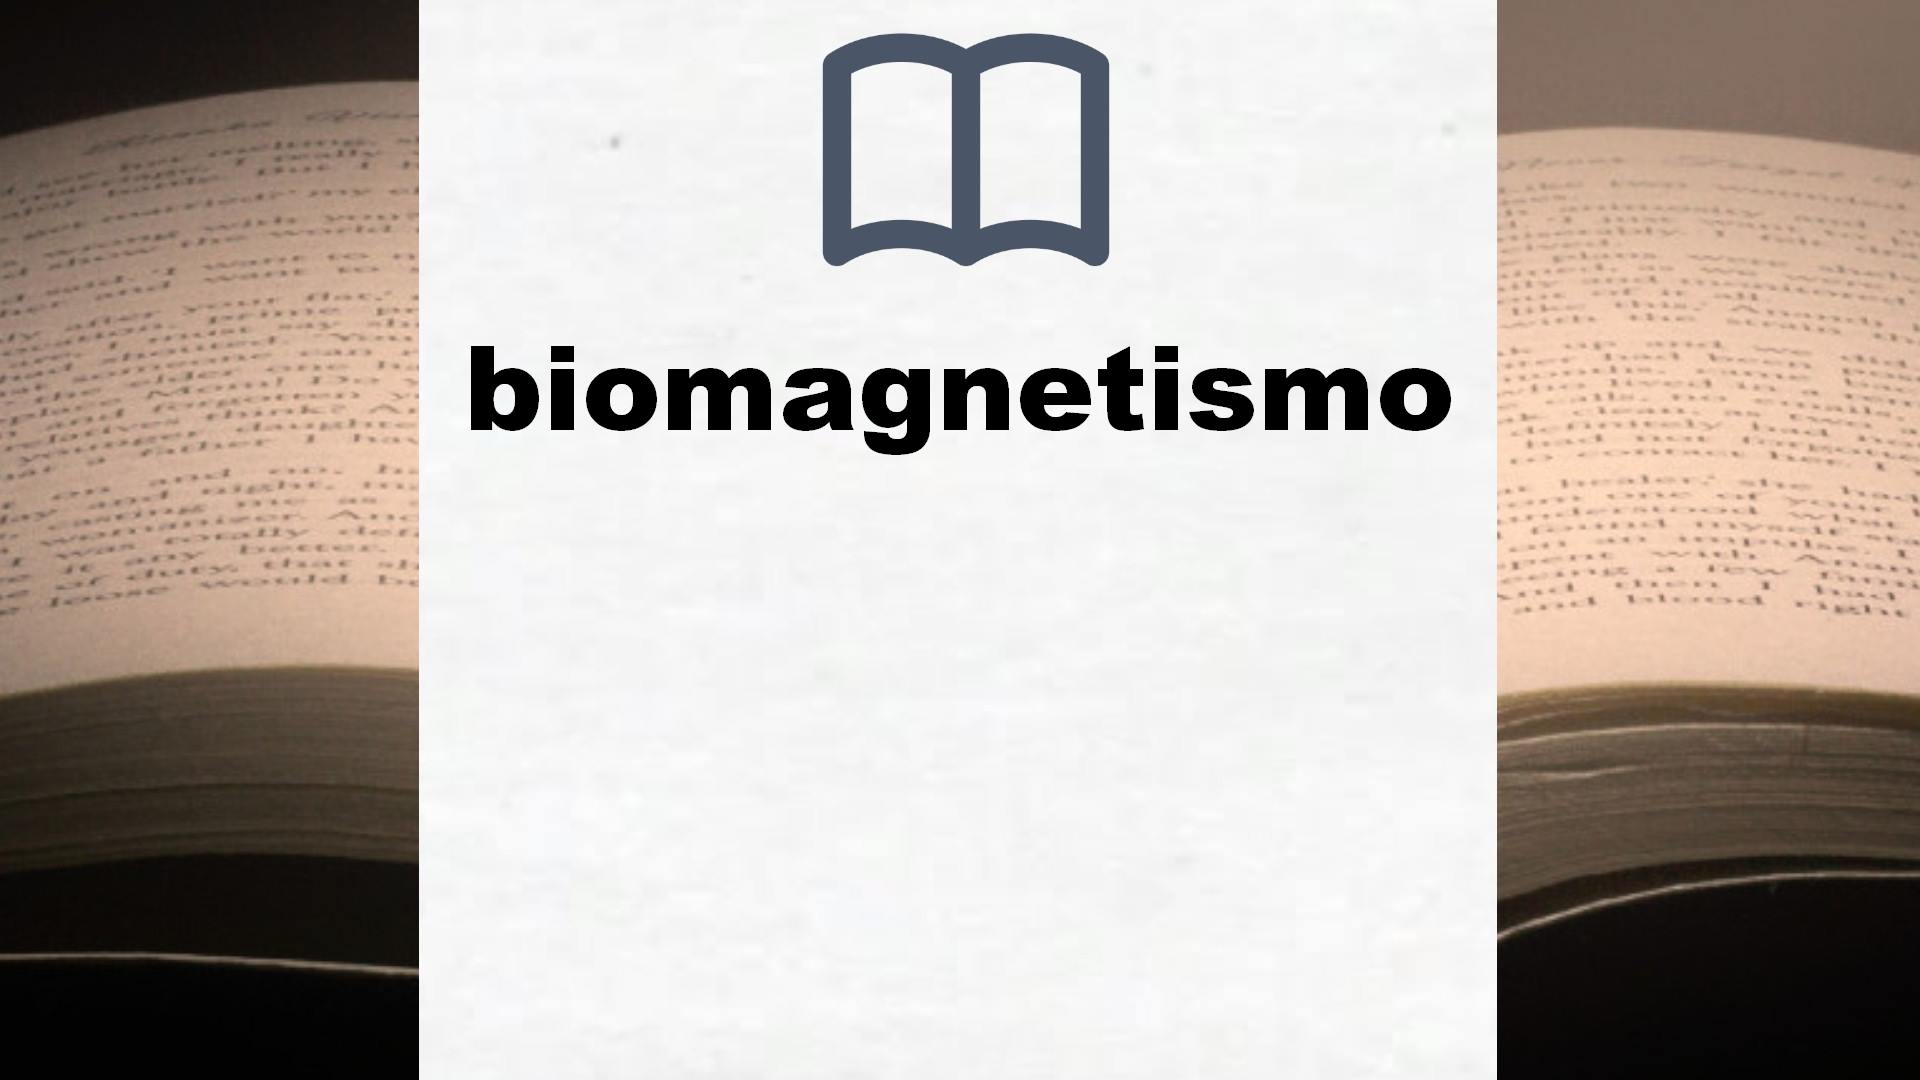 Libros sobre biomagnetismo